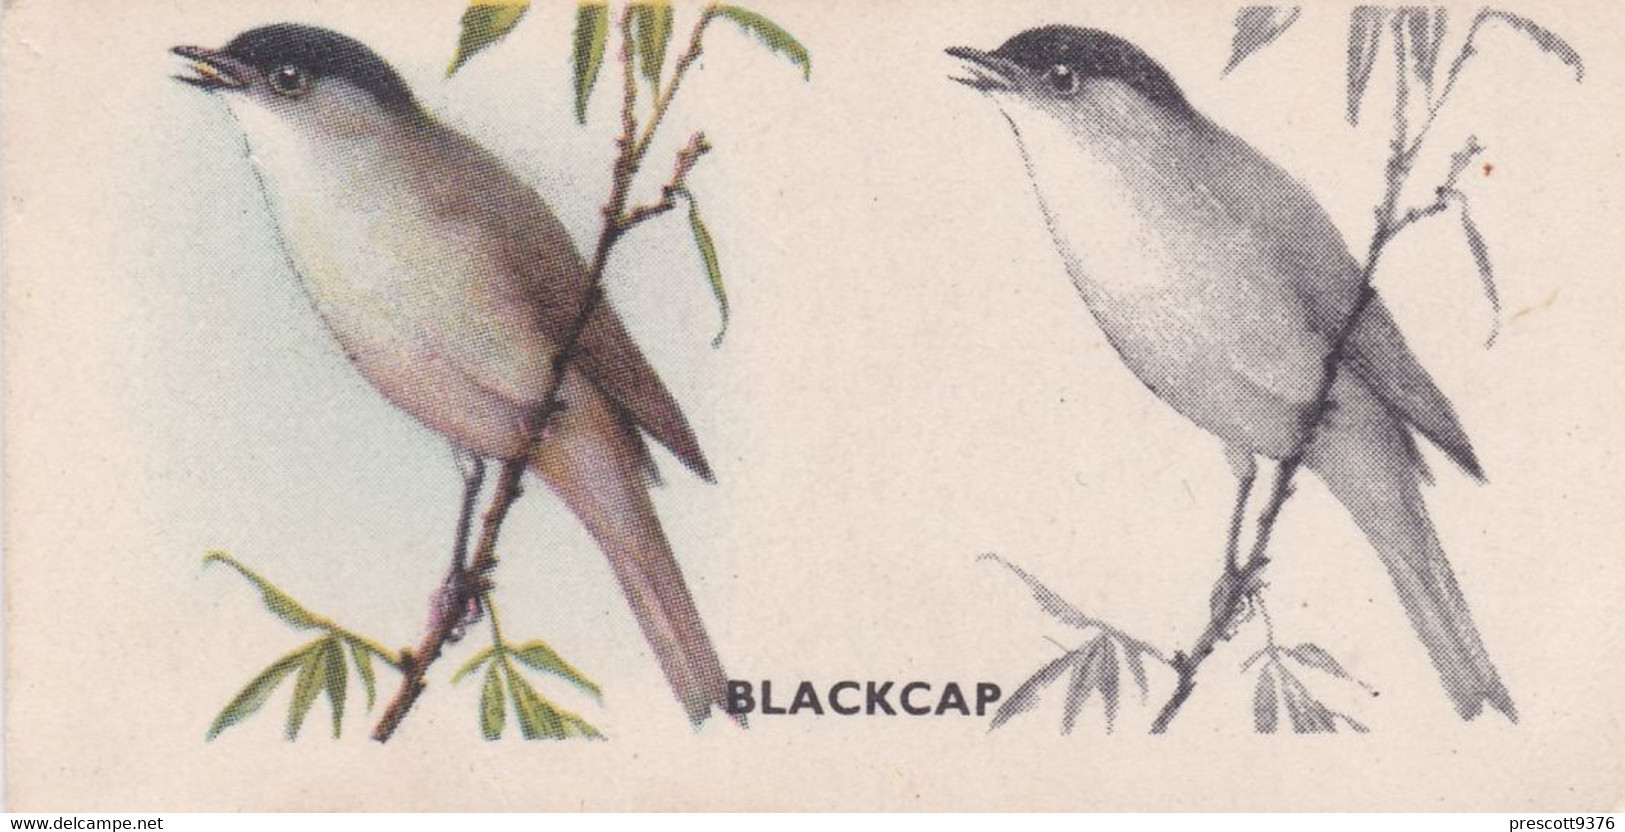 25 Blackcap - Bird Painting 1938 - Godfrey Phillips Cigarette Card - Original - Wildlife - Nature - Phillips / BDV